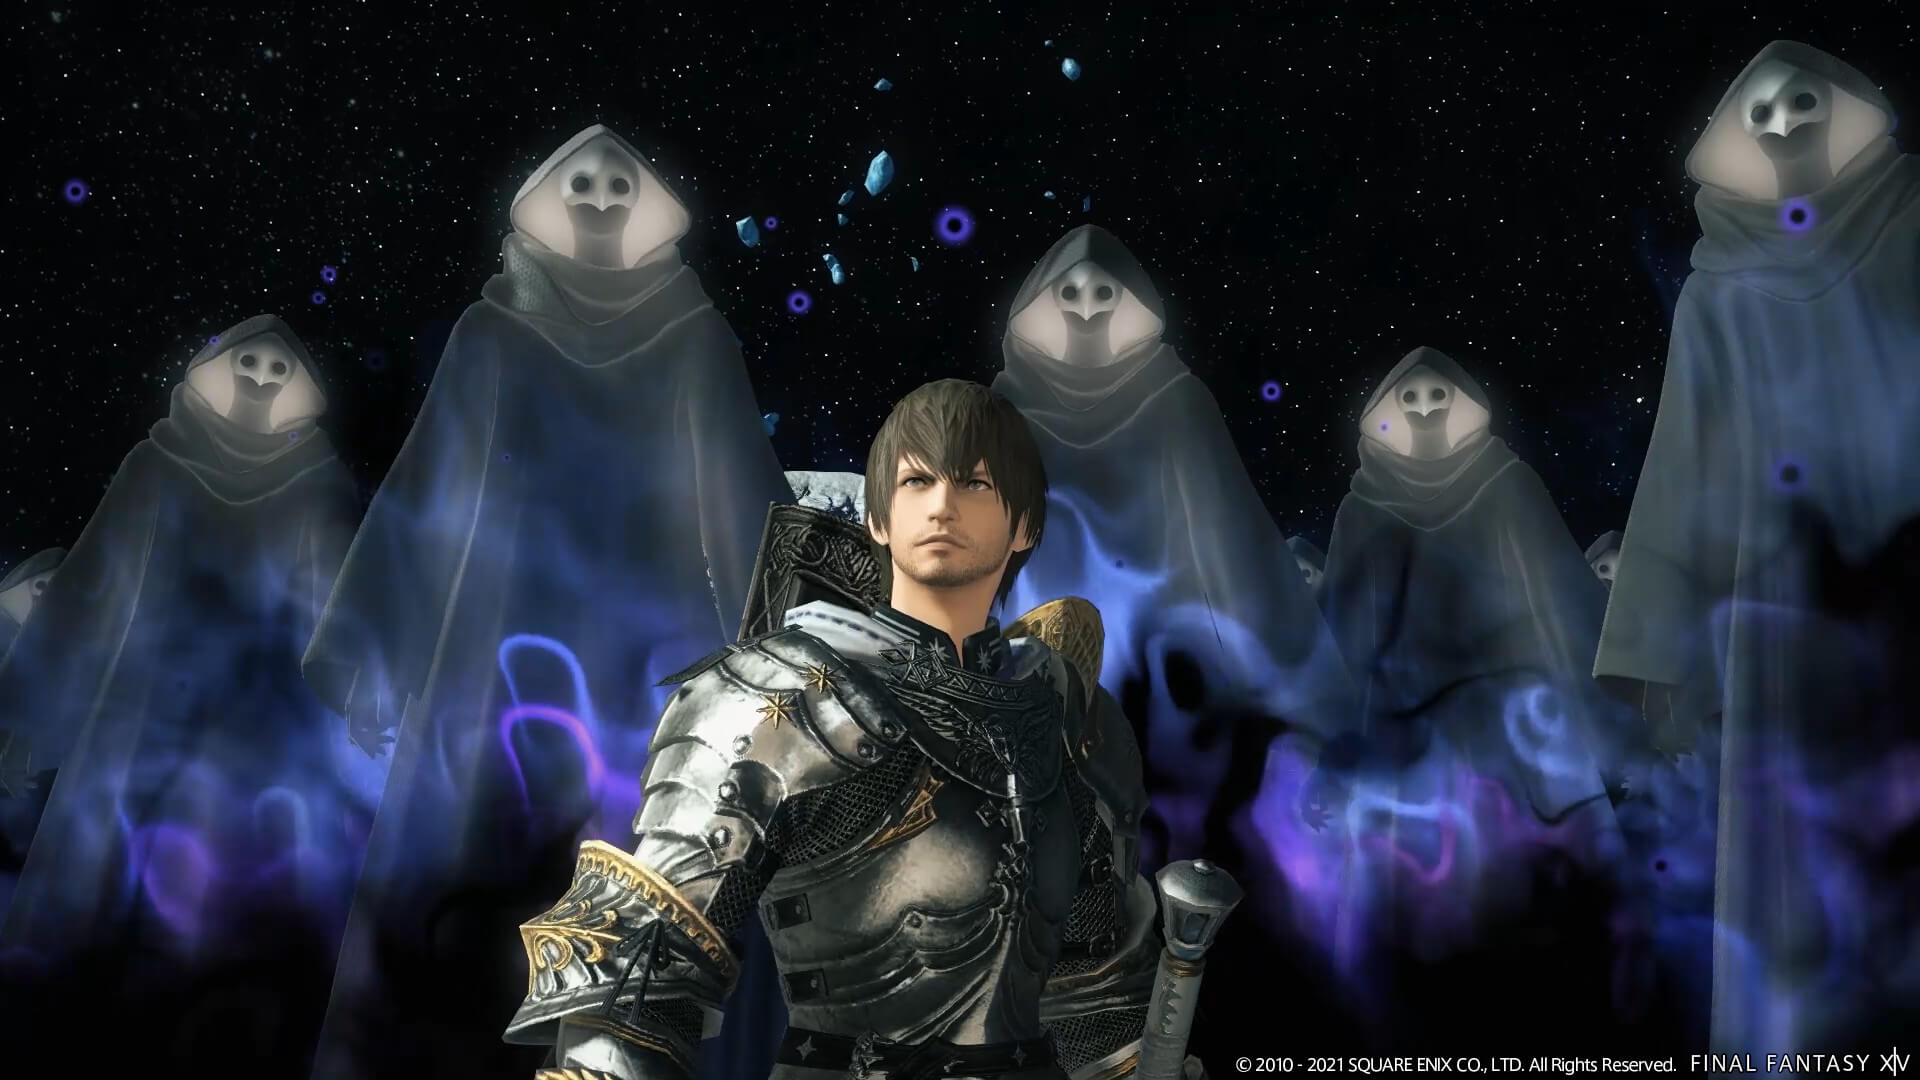 The Derplander surrounded by Ascians in Final Fantasy XIV: Endwalker